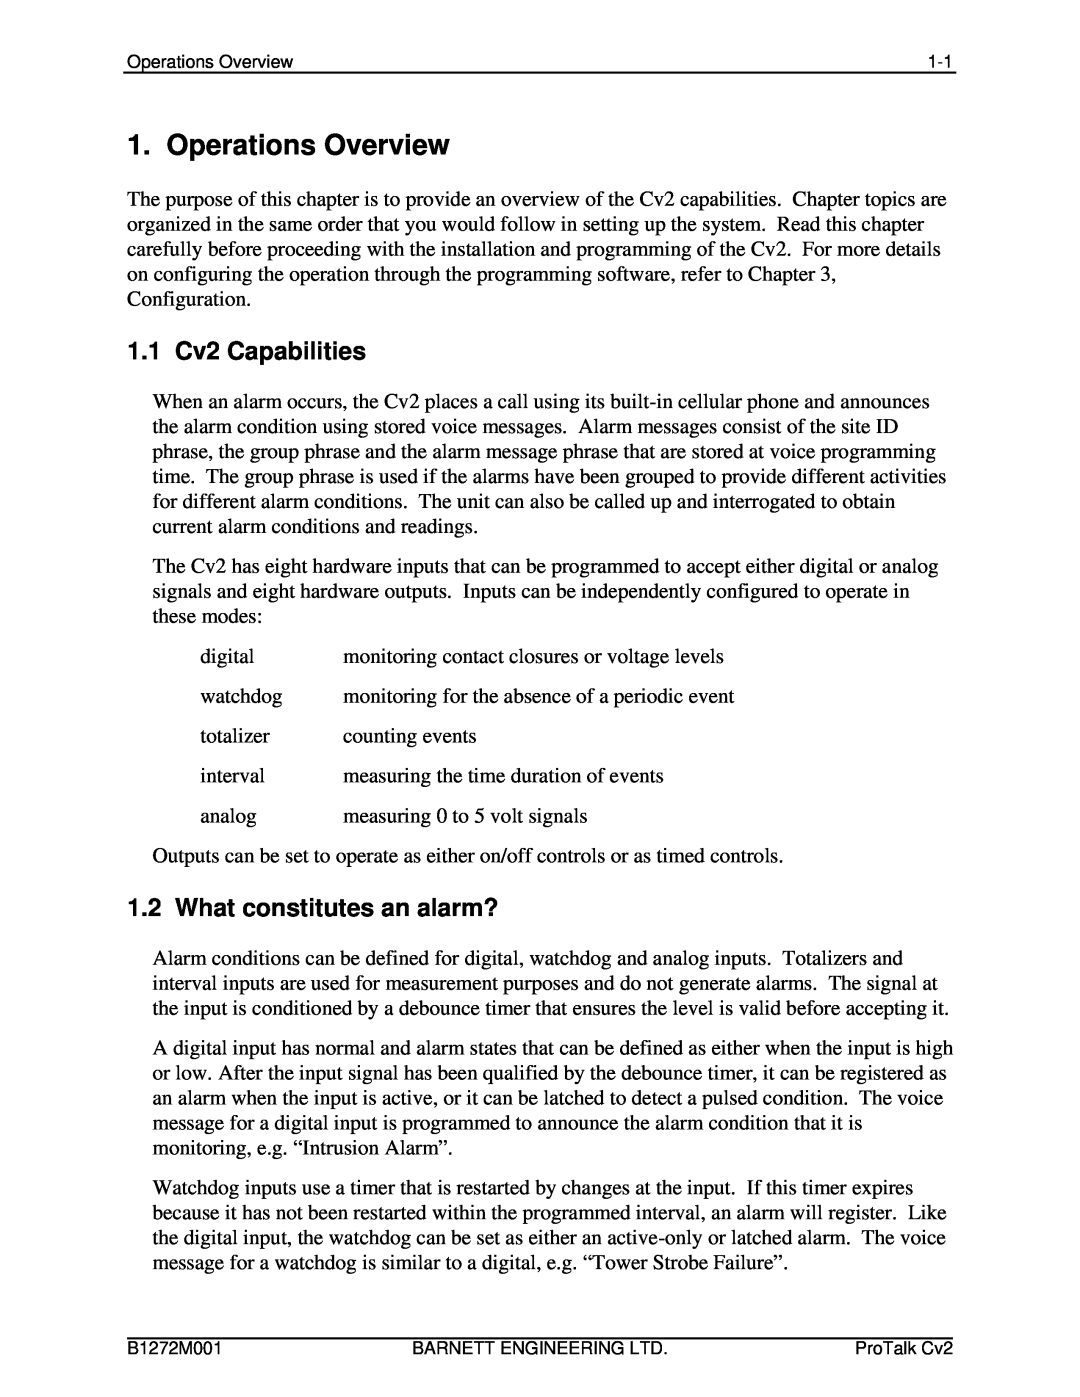 Barnett Engineering ARU CV2 instruction manual Operations Overview, 1.1 Cv2 Capabilities, What constitutes an alarm? 